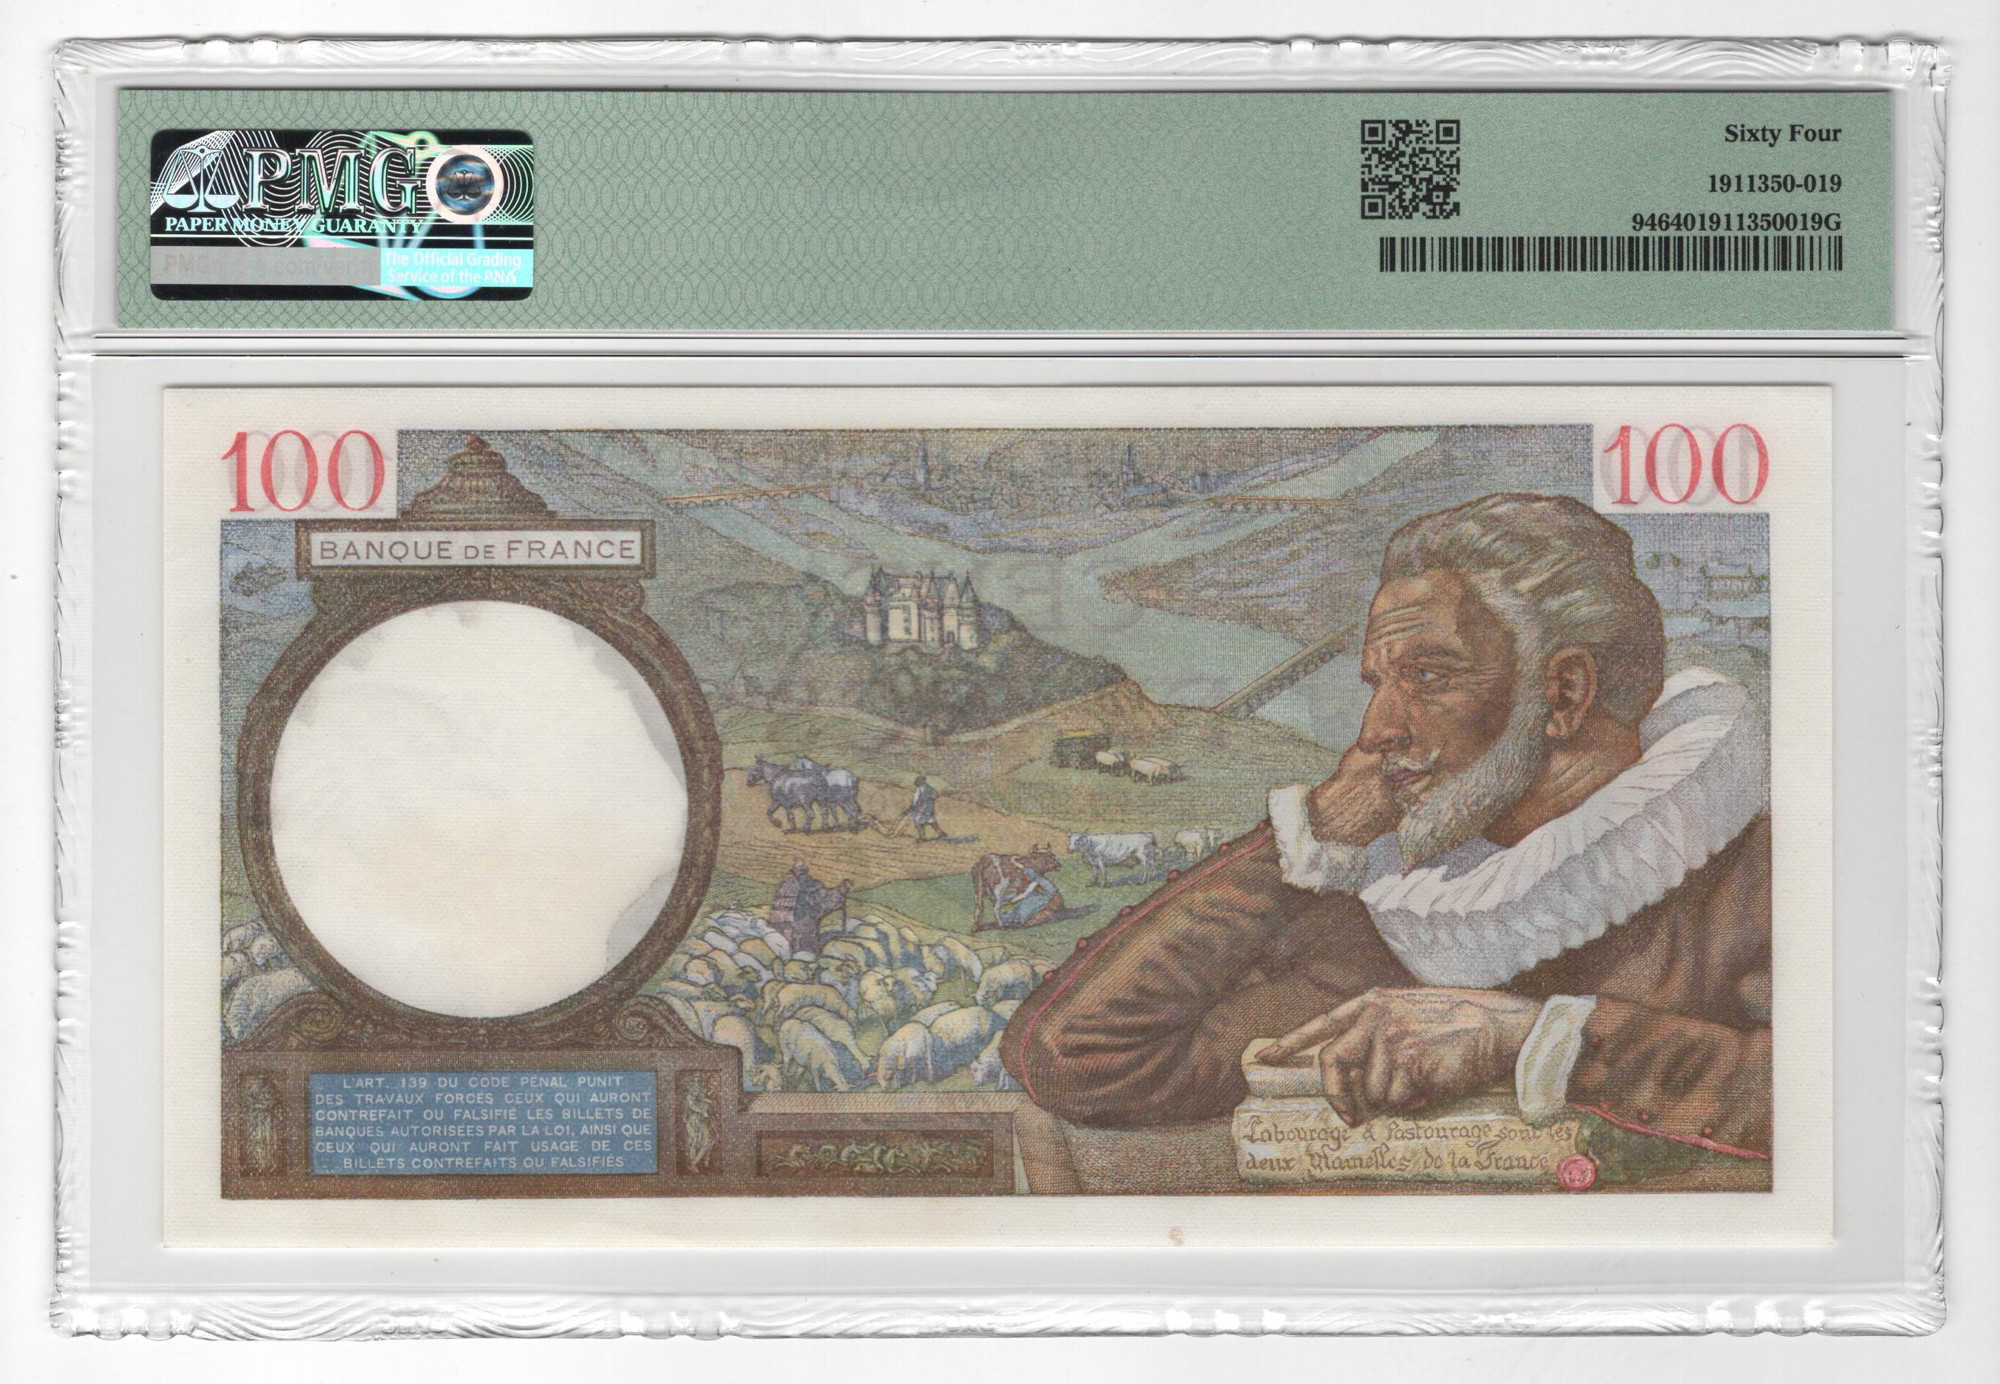 France 100 Francs 1940 PMG 64 Choice Uncirulated | Katz Auction